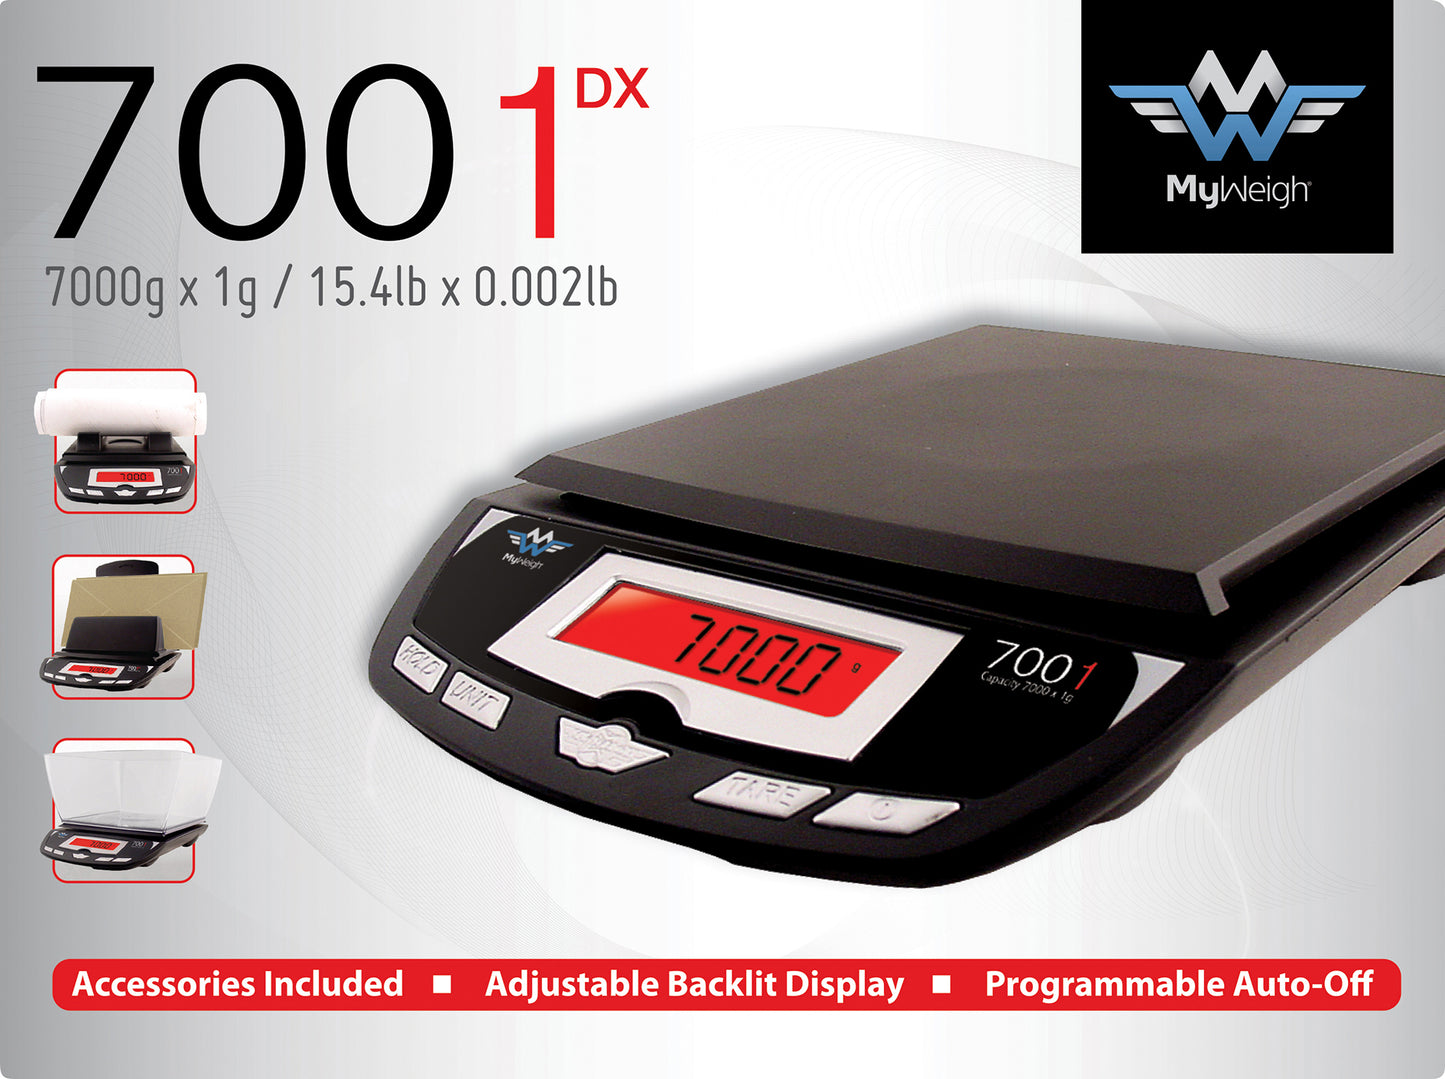 Digitalwaage My Weigh 7001 DX - 7.000g x 1g